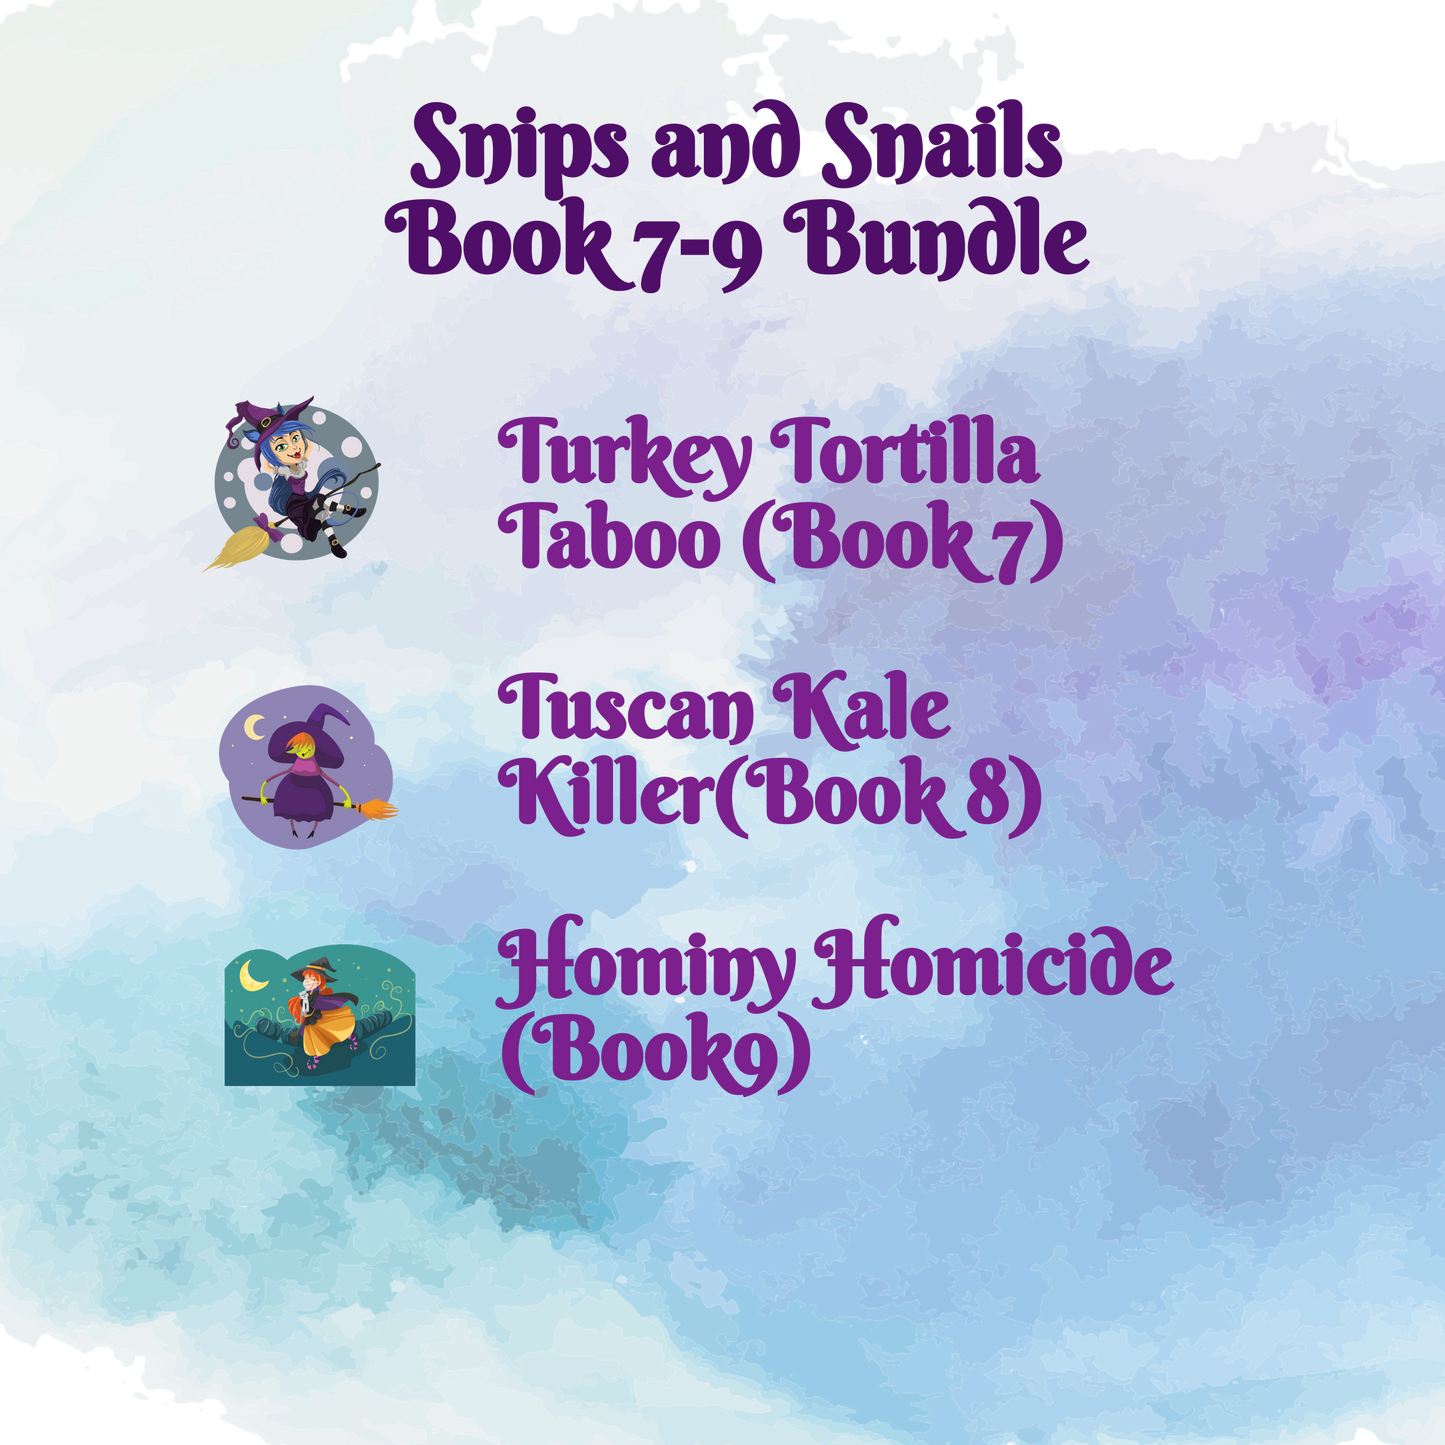 Snips and Snails Book 7-9 Bundle